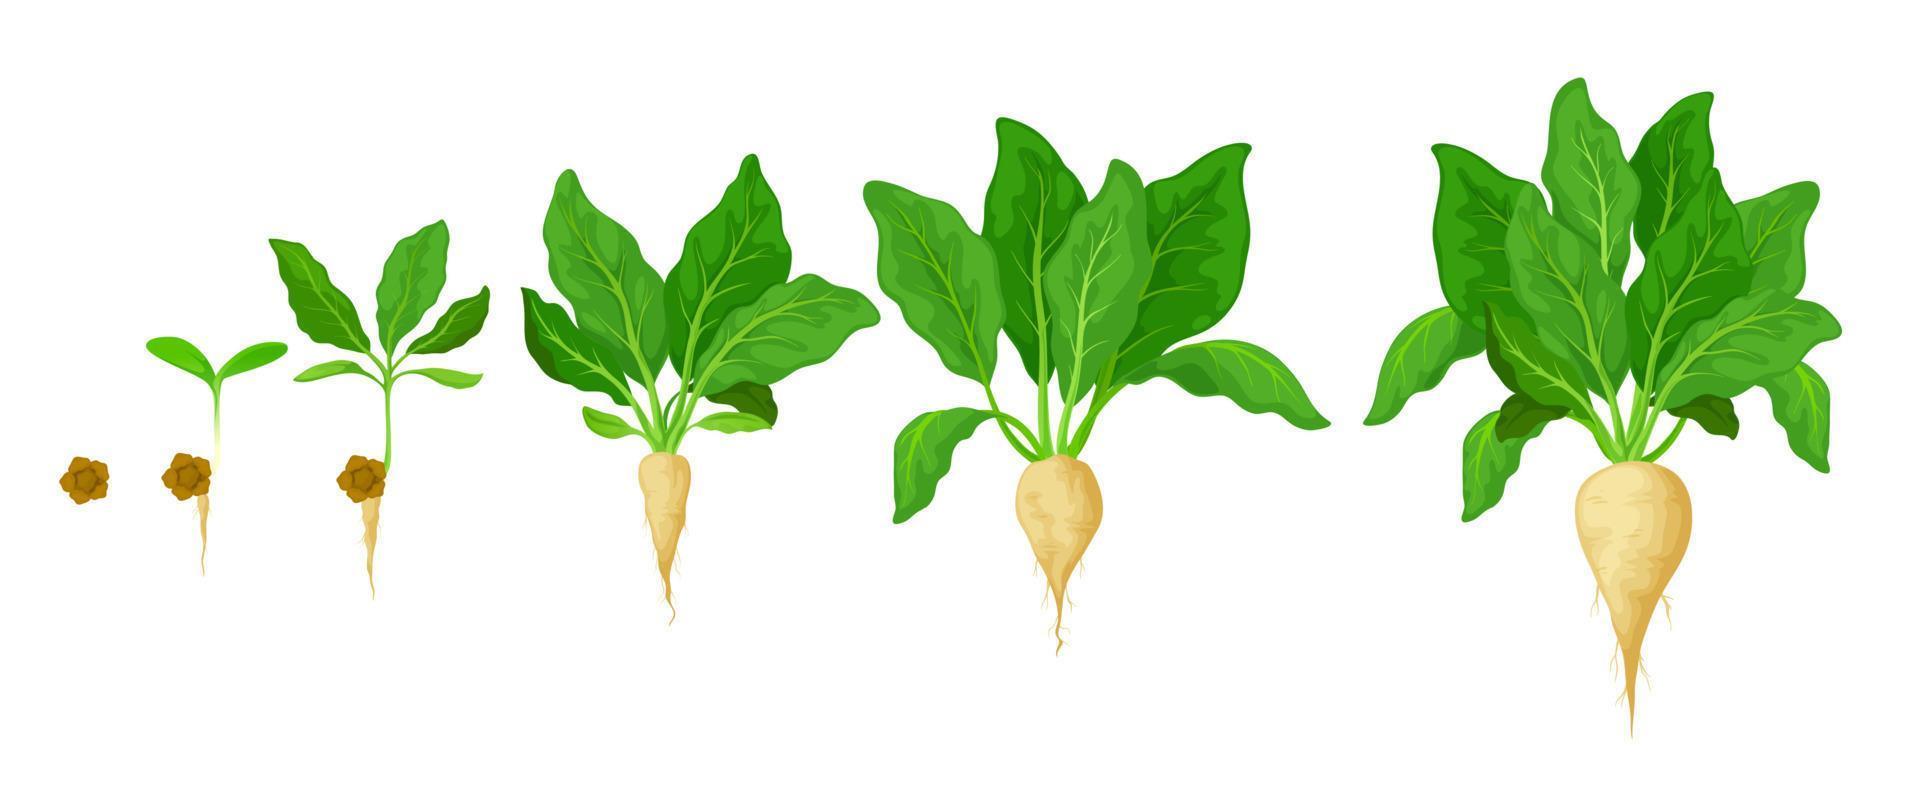 Sugar beet grow, vegetable germination stages vector